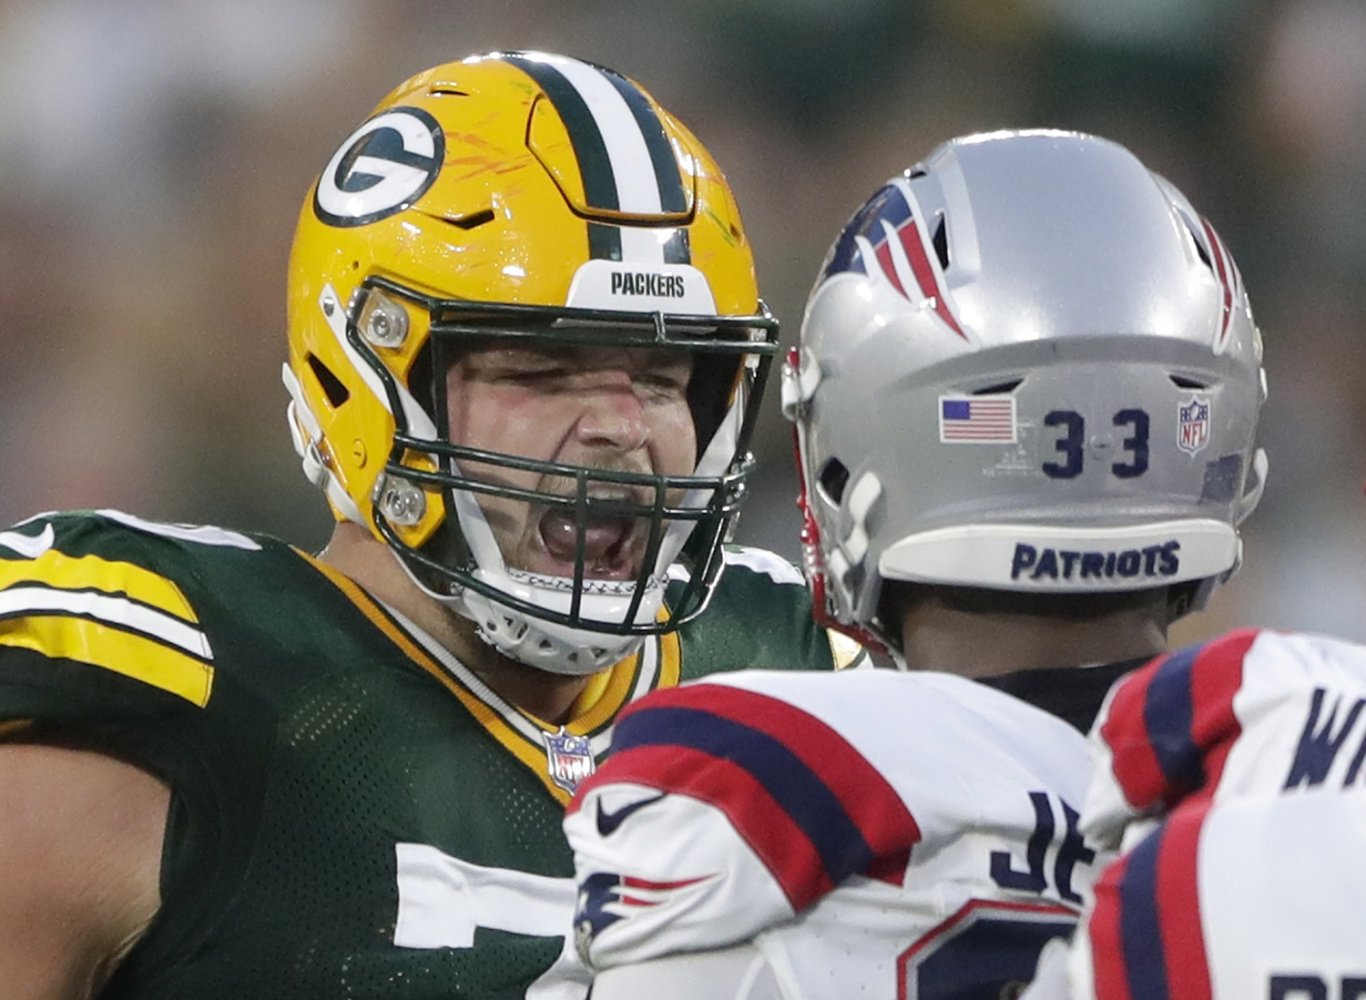 Aaron Jones, A.J. Dillon power Packers' game-tying touchdown drive